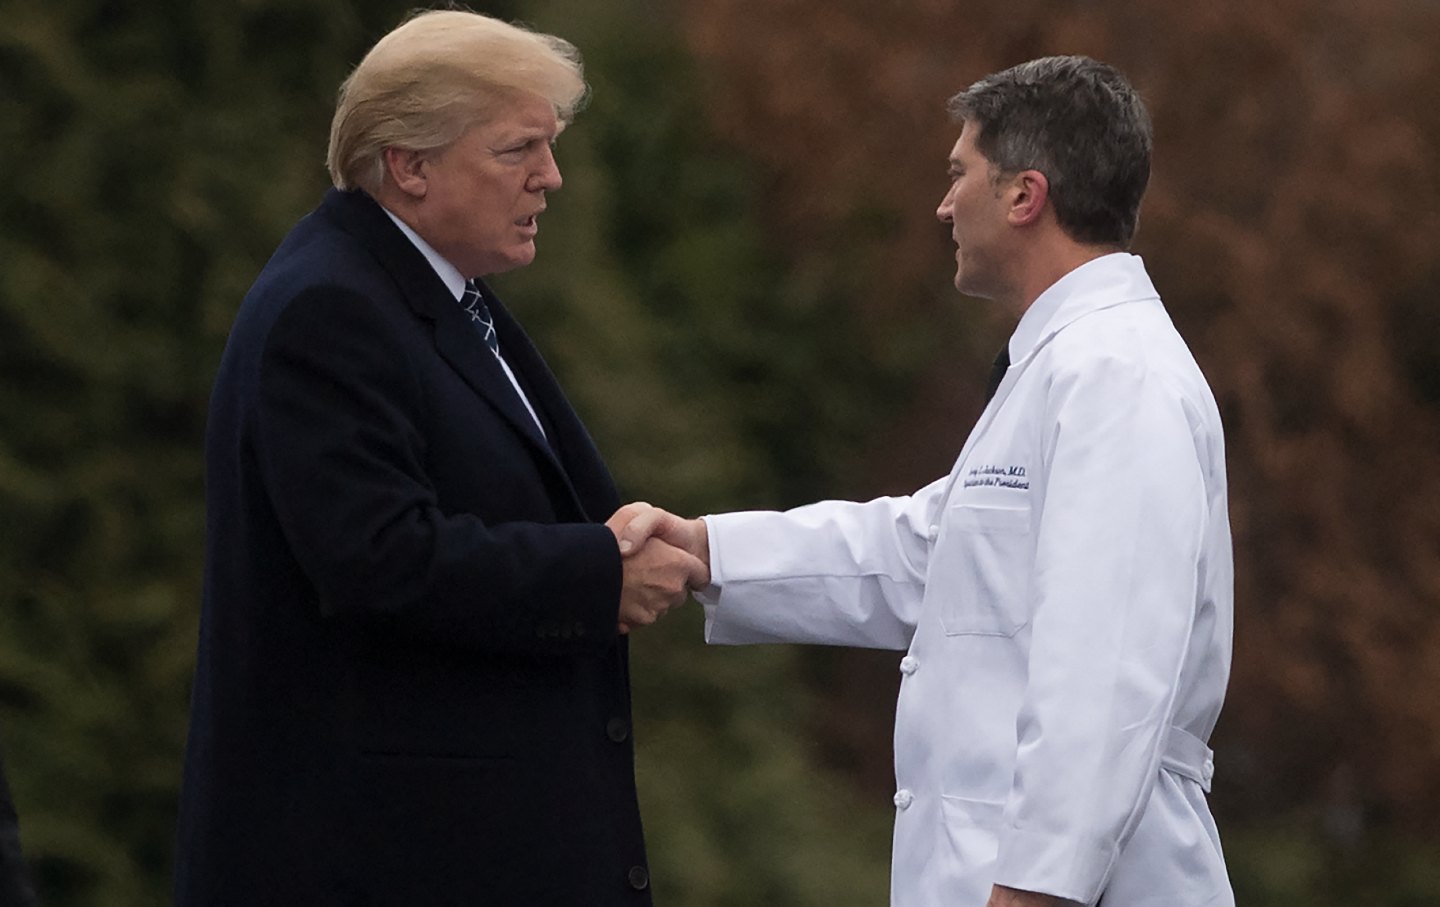 Trump shook the doctor's hand